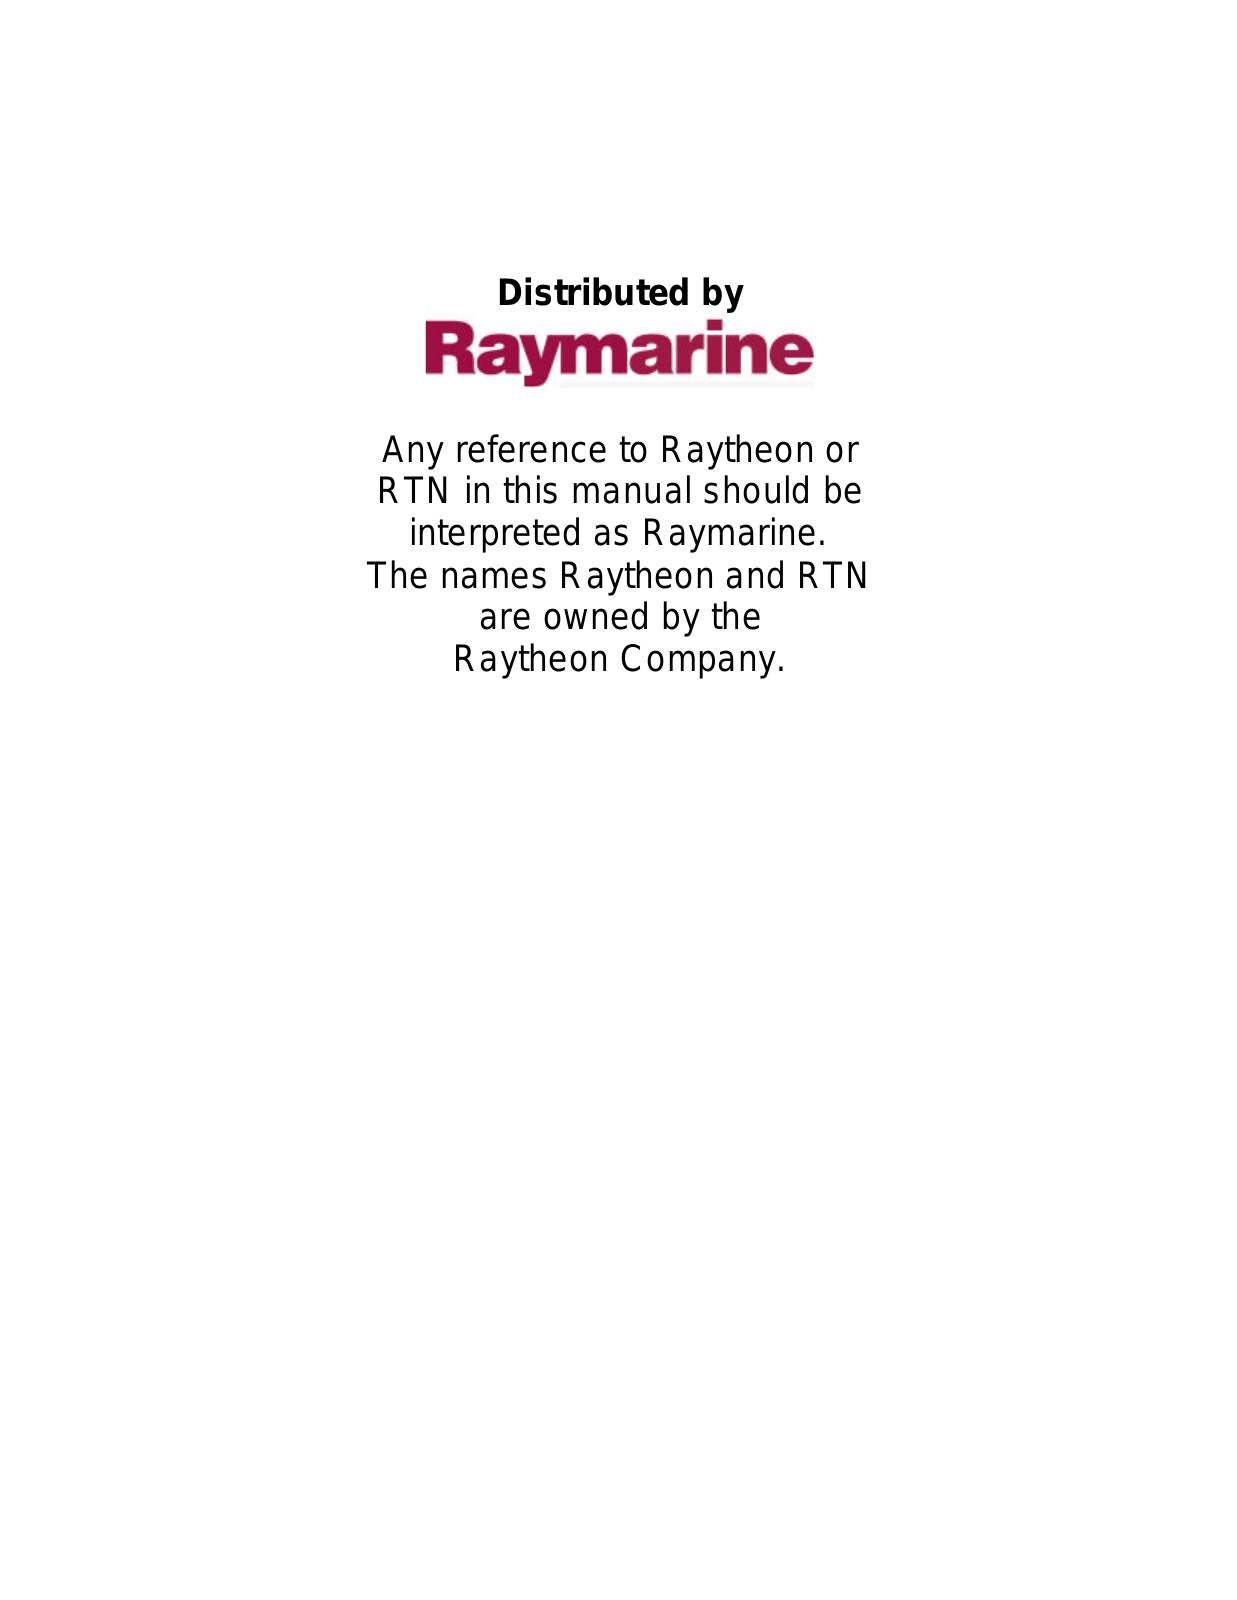 Raymarine APELCO 8500 Manual